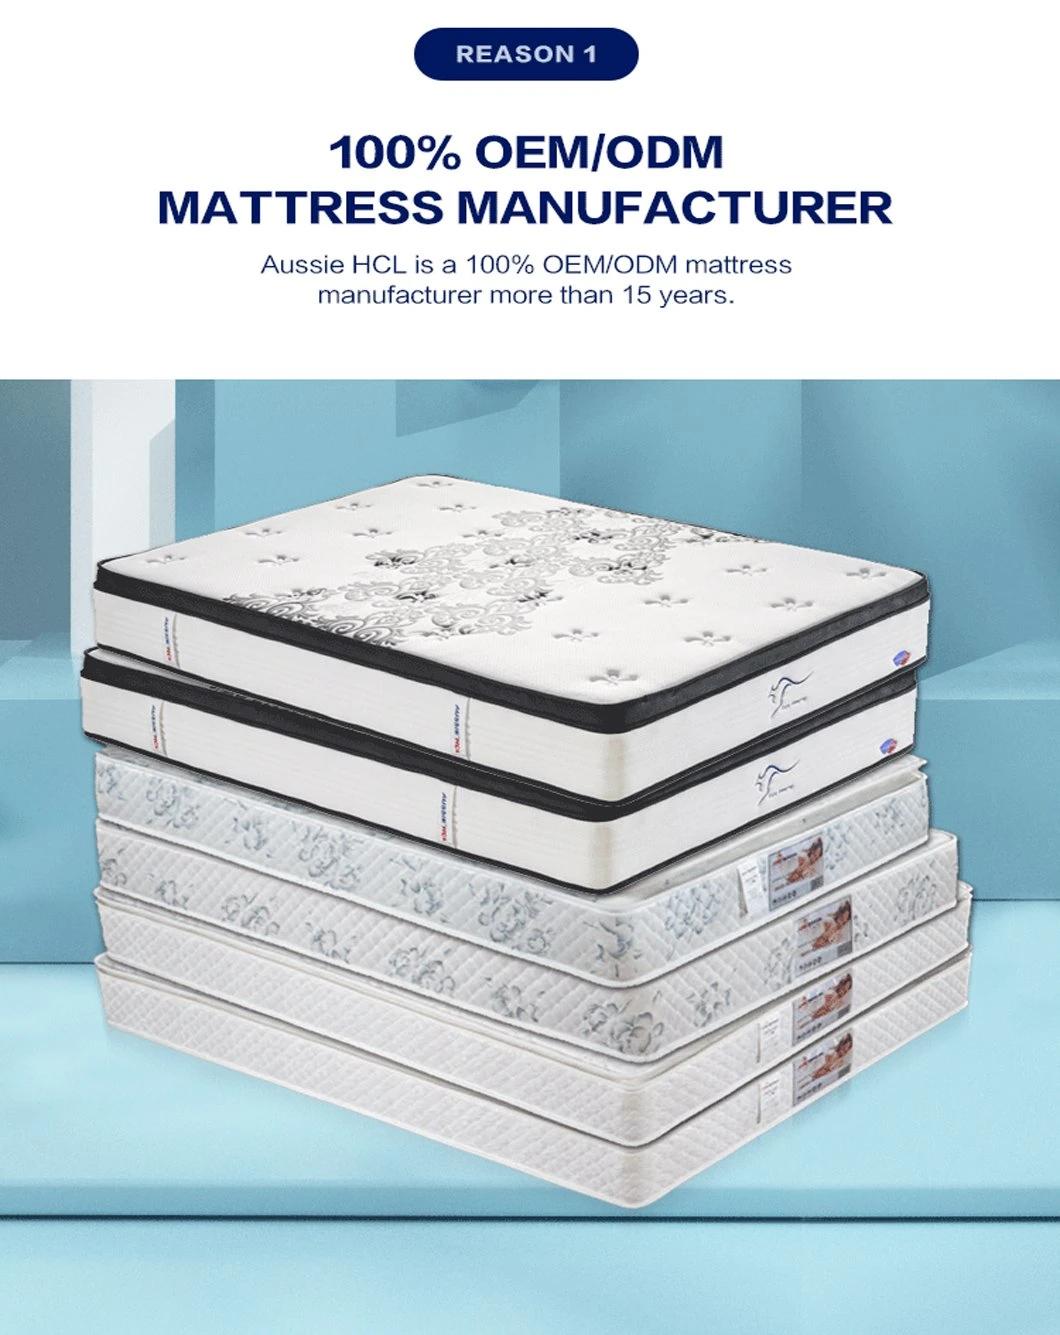 Premium Sleep Well Roll Single Double Full King Mattresses Royal Luxury High Density Rebonded Foam Mattress